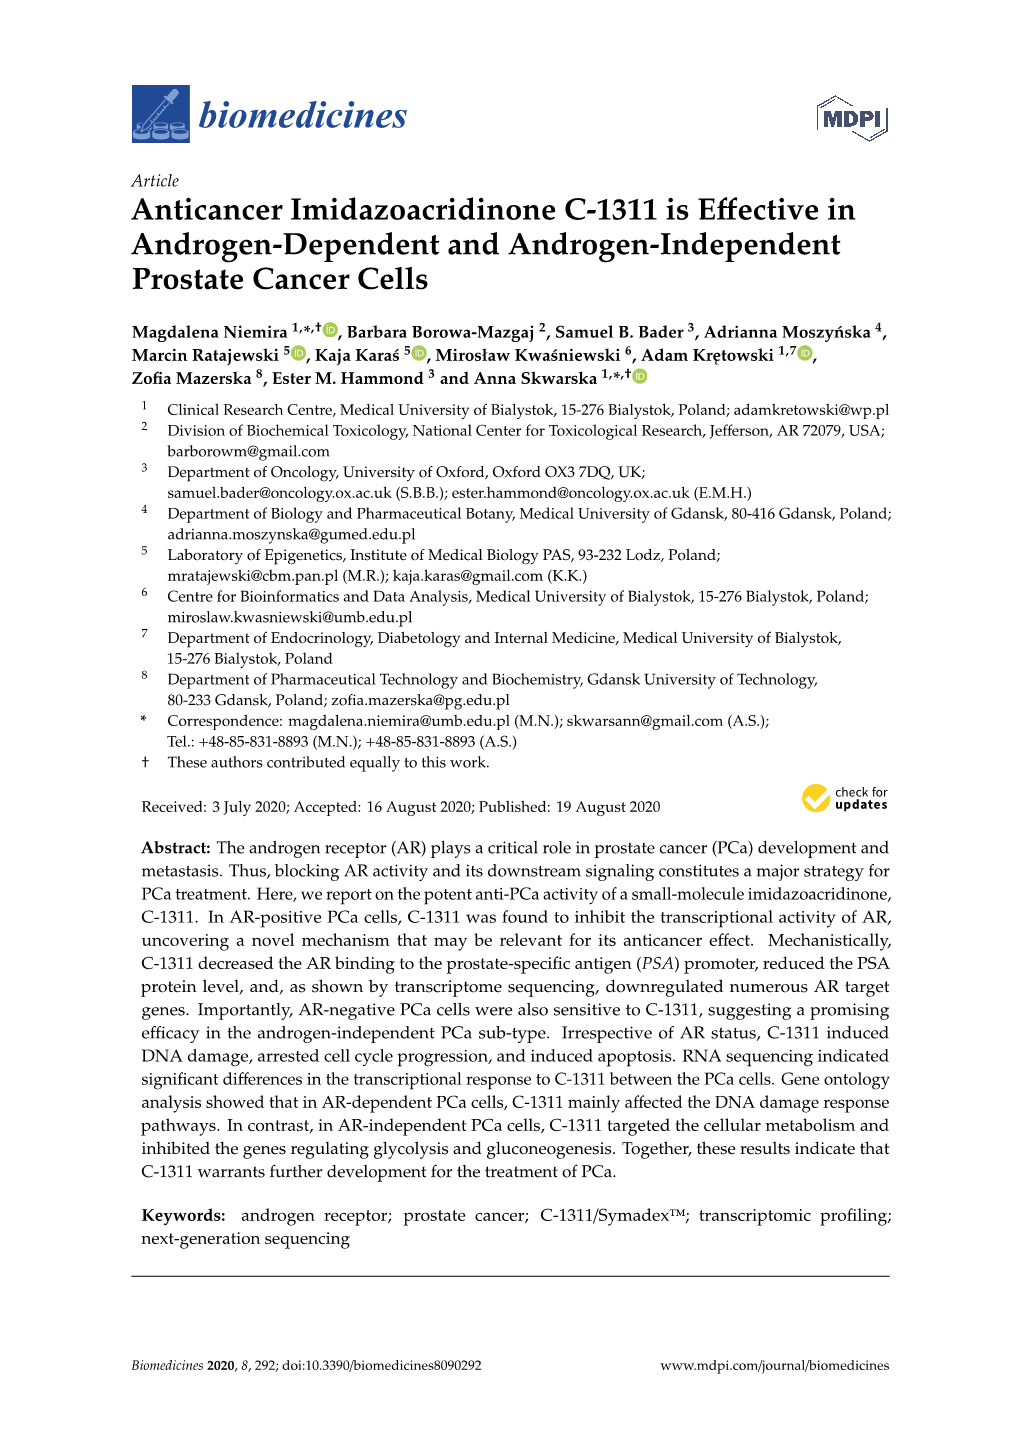 Anticancer Imidazoacridinone C-1311 Is Effective in Androgen-Dependent